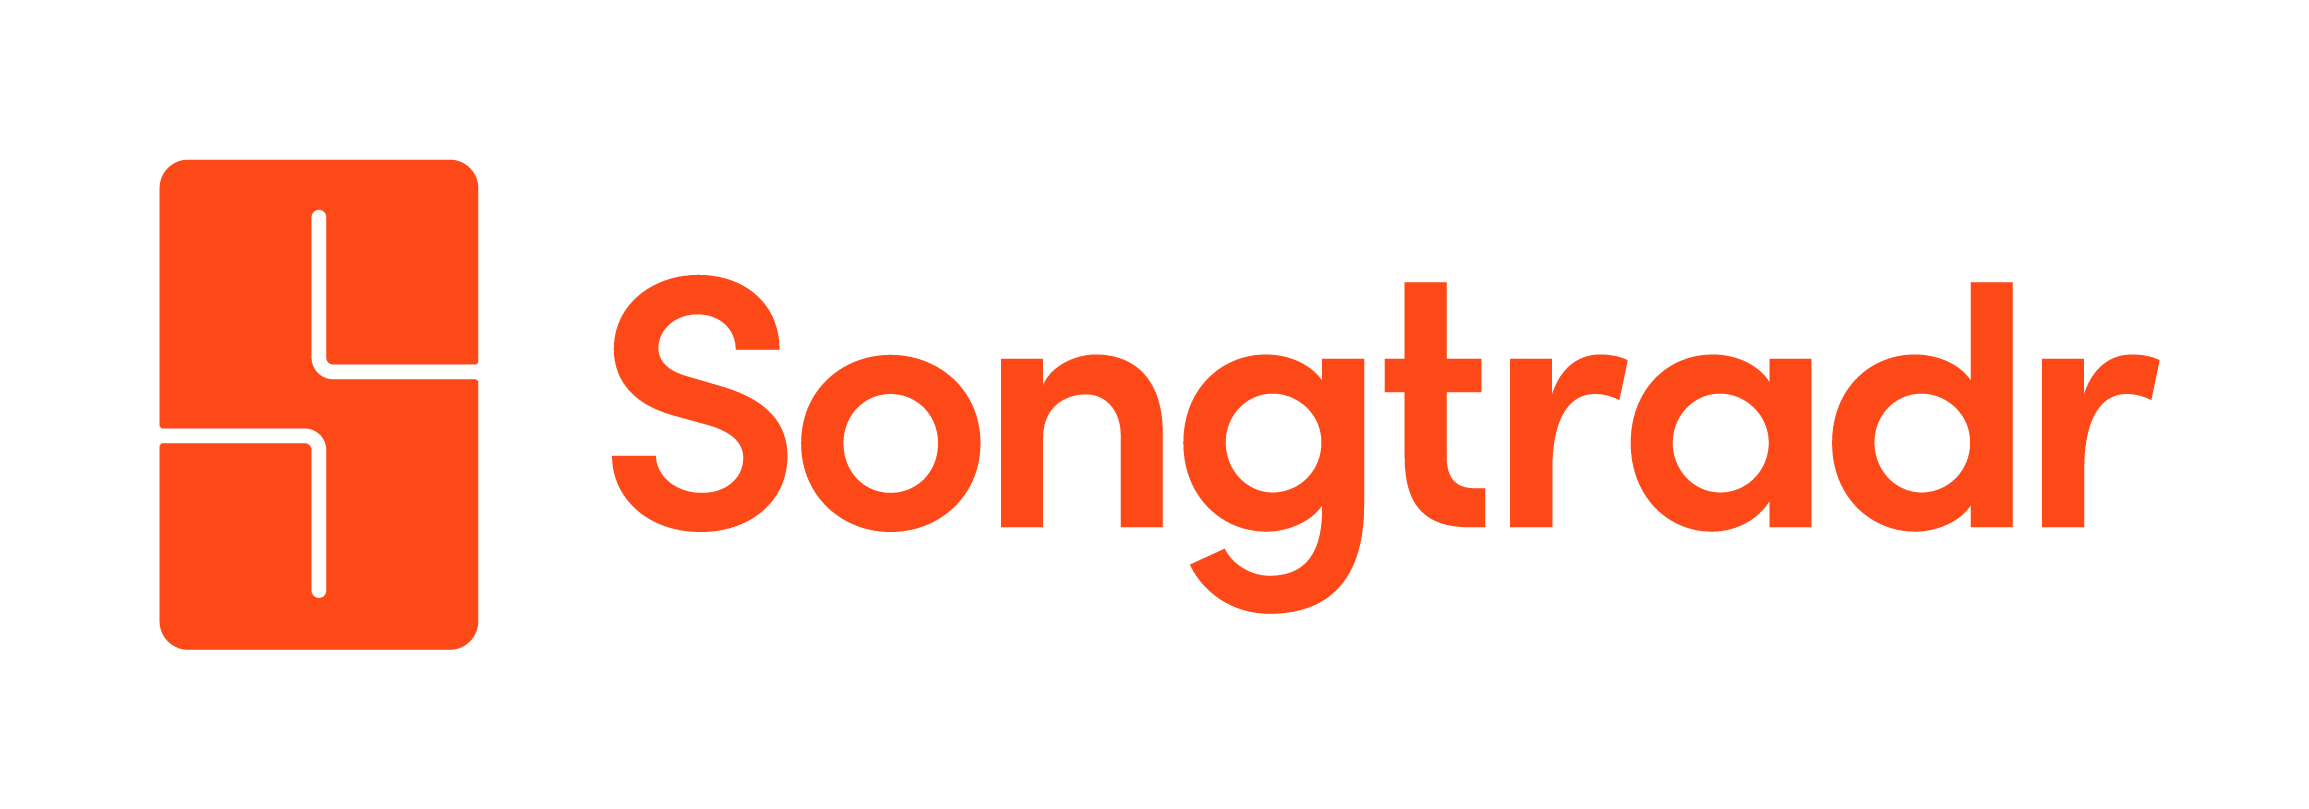 Songtradr, Inc. logo